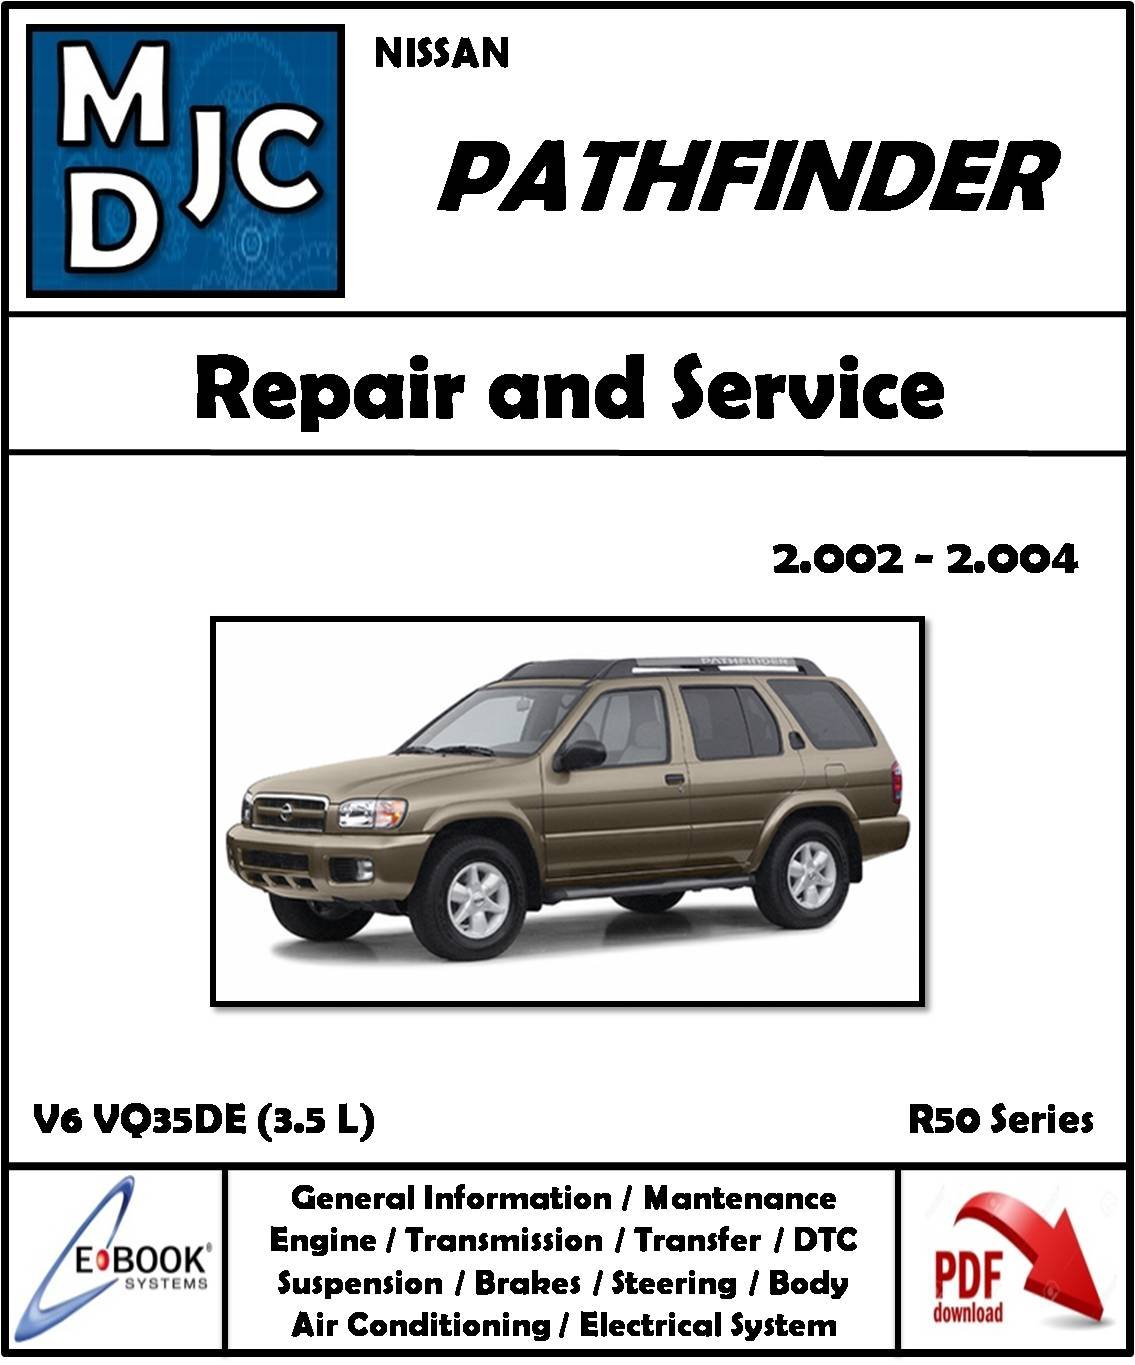 Nissan Pathfinder R50 Series 2002 - 2004